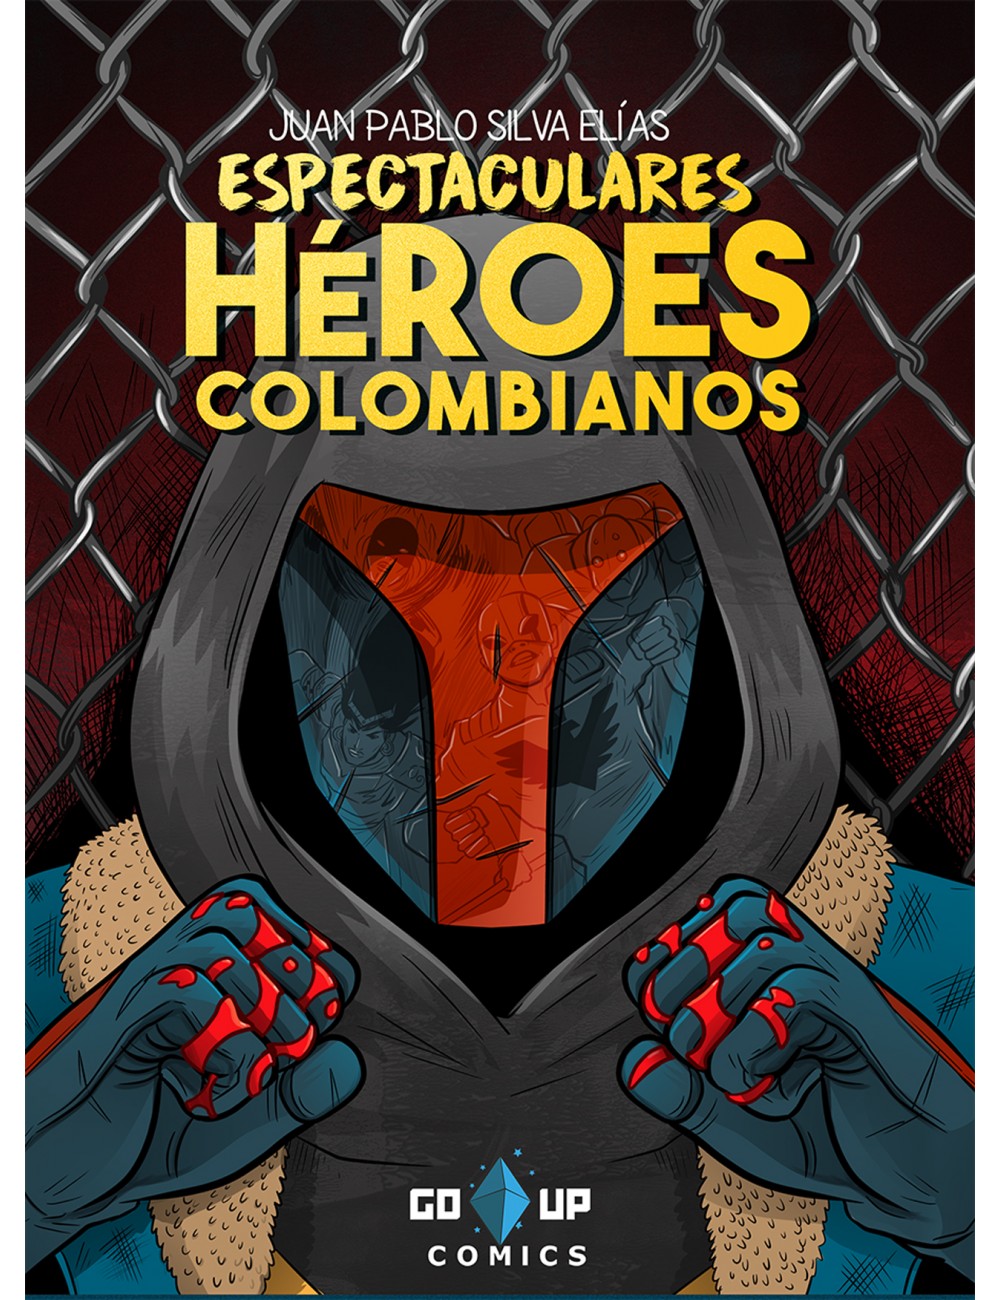 Cómic: Espectaculares Héroes Colombianos COMICHCPARTEC  GoUp Comics